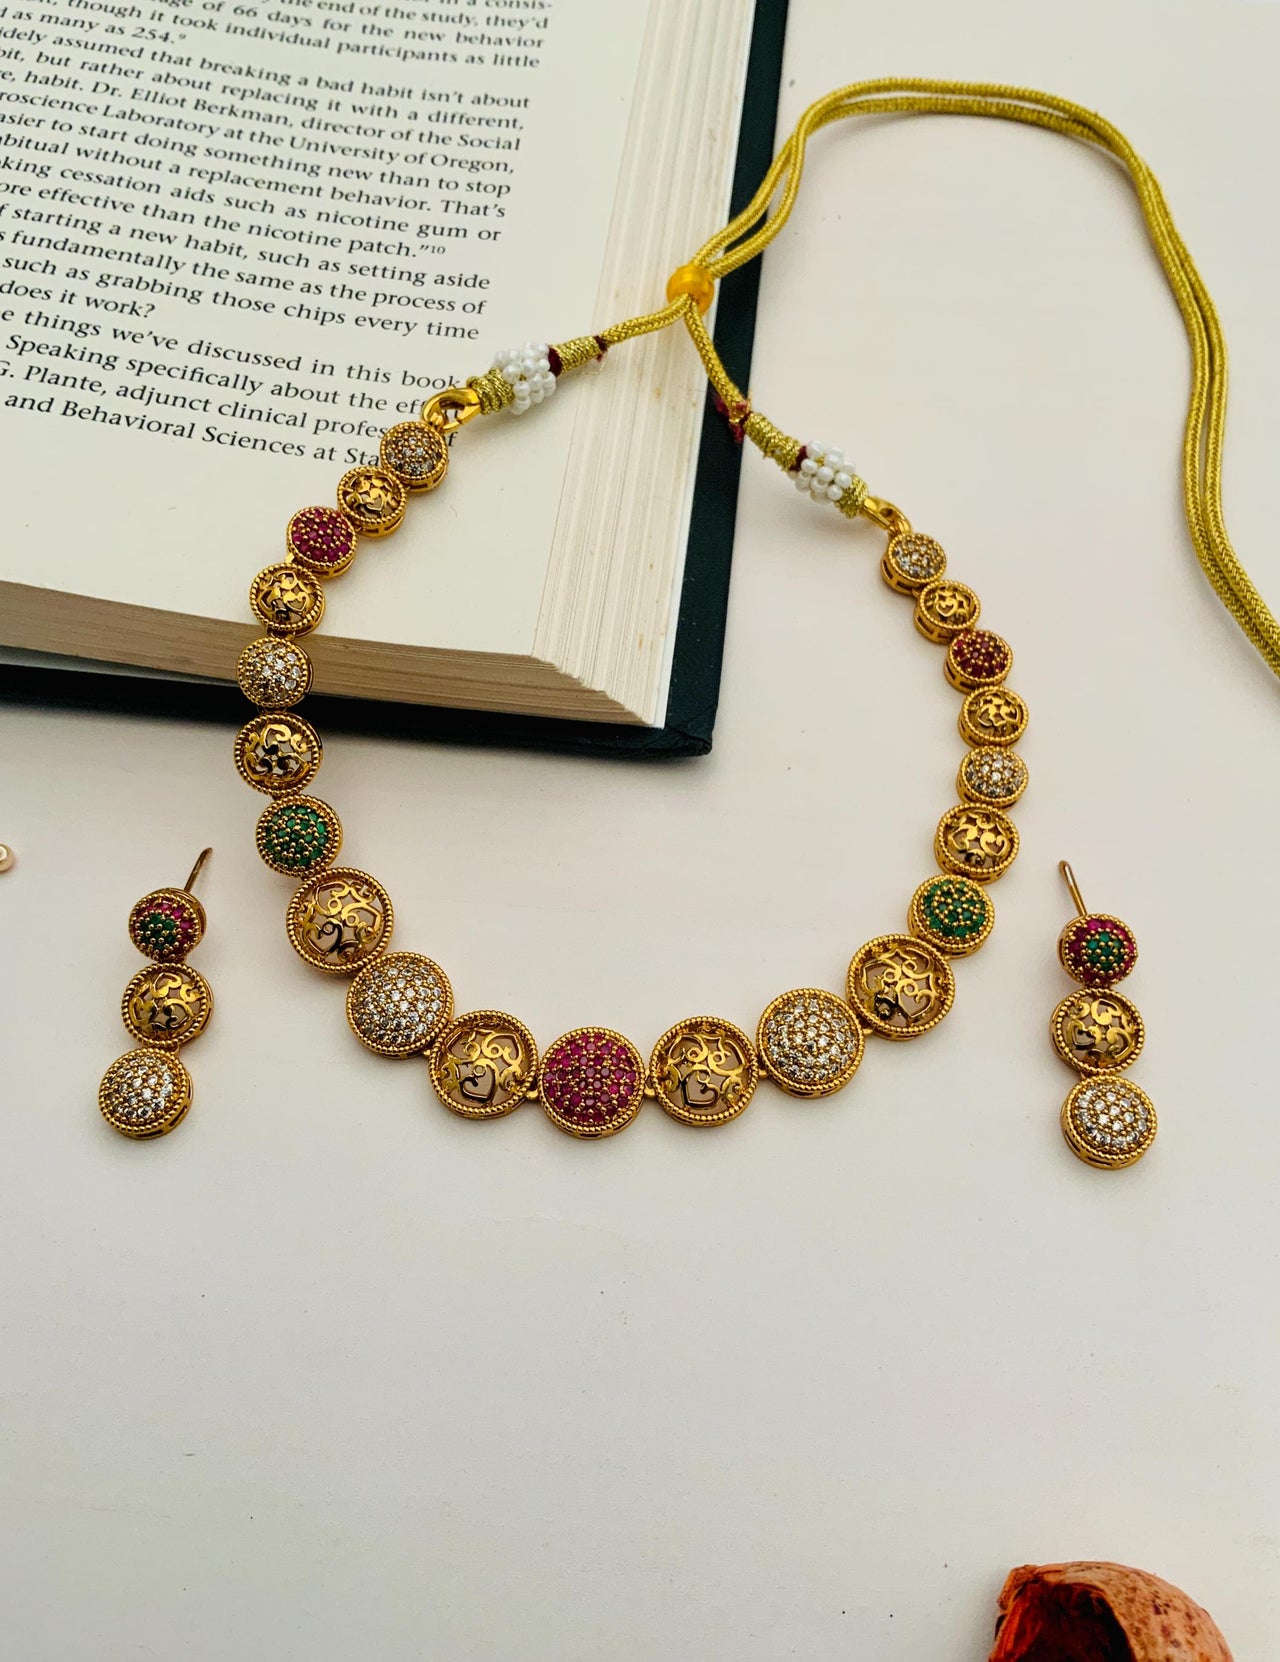 Abdesigns Necklace Collection